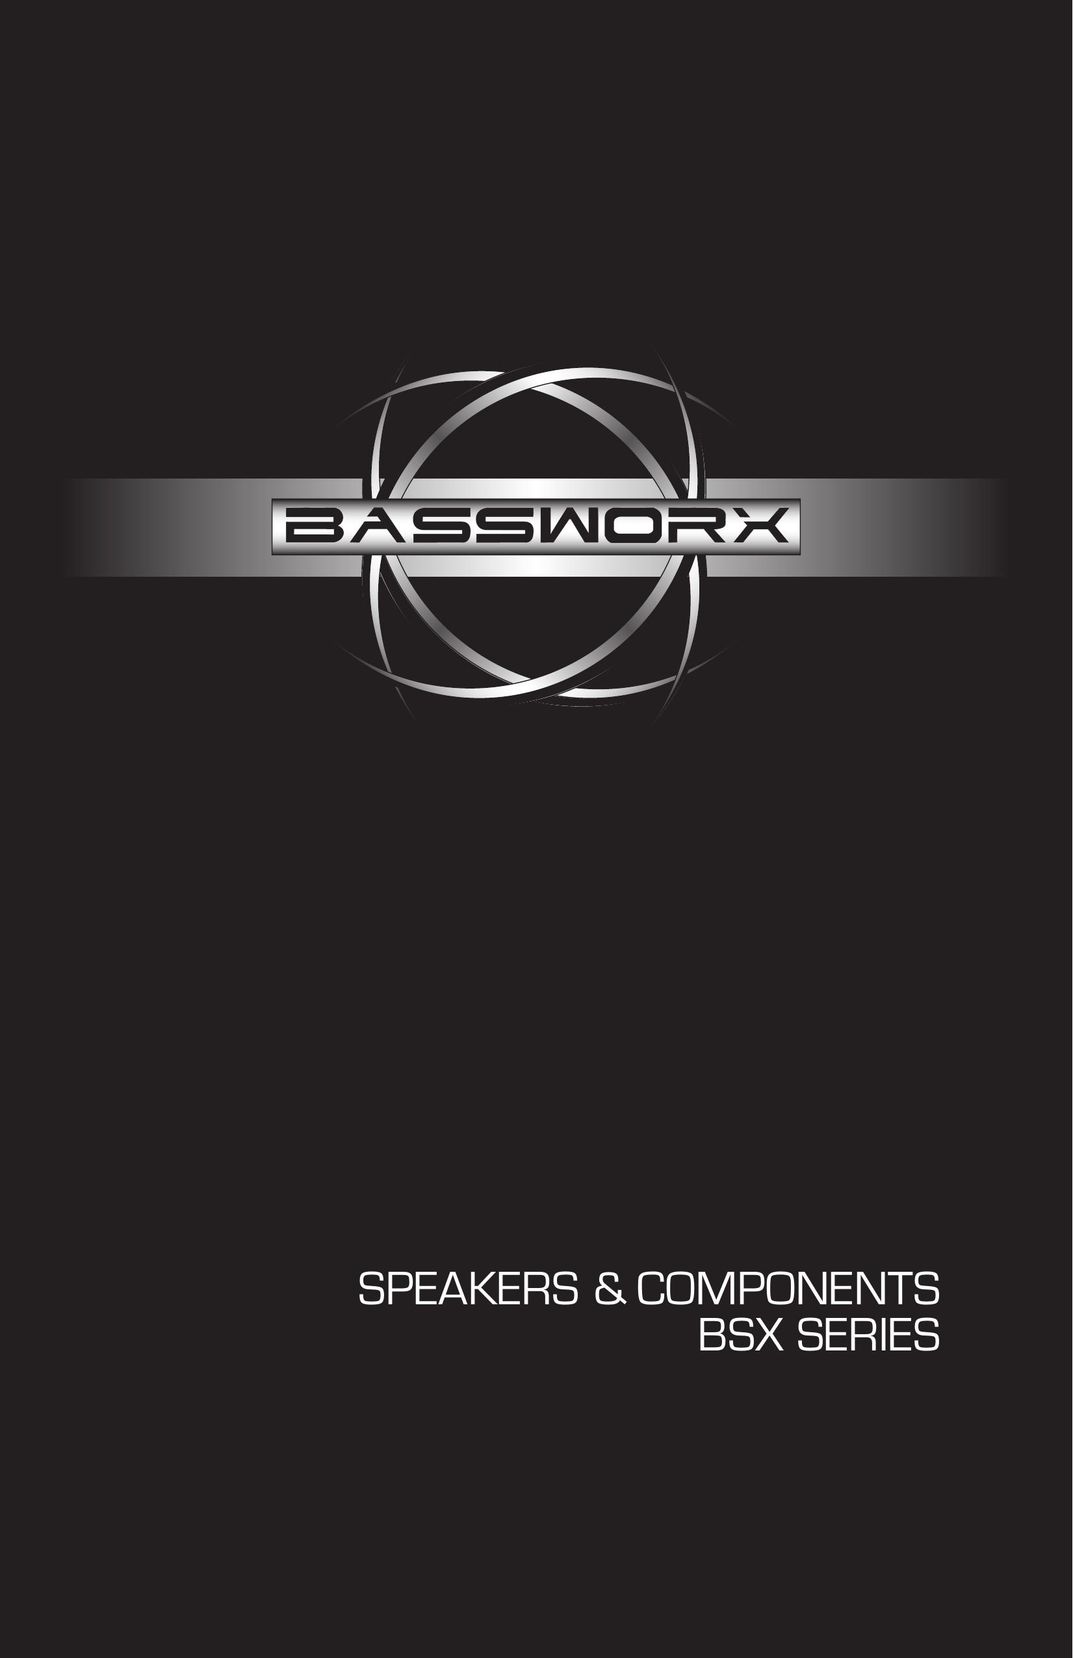 Bassworx BSX62.1 Car Speaker User Manual